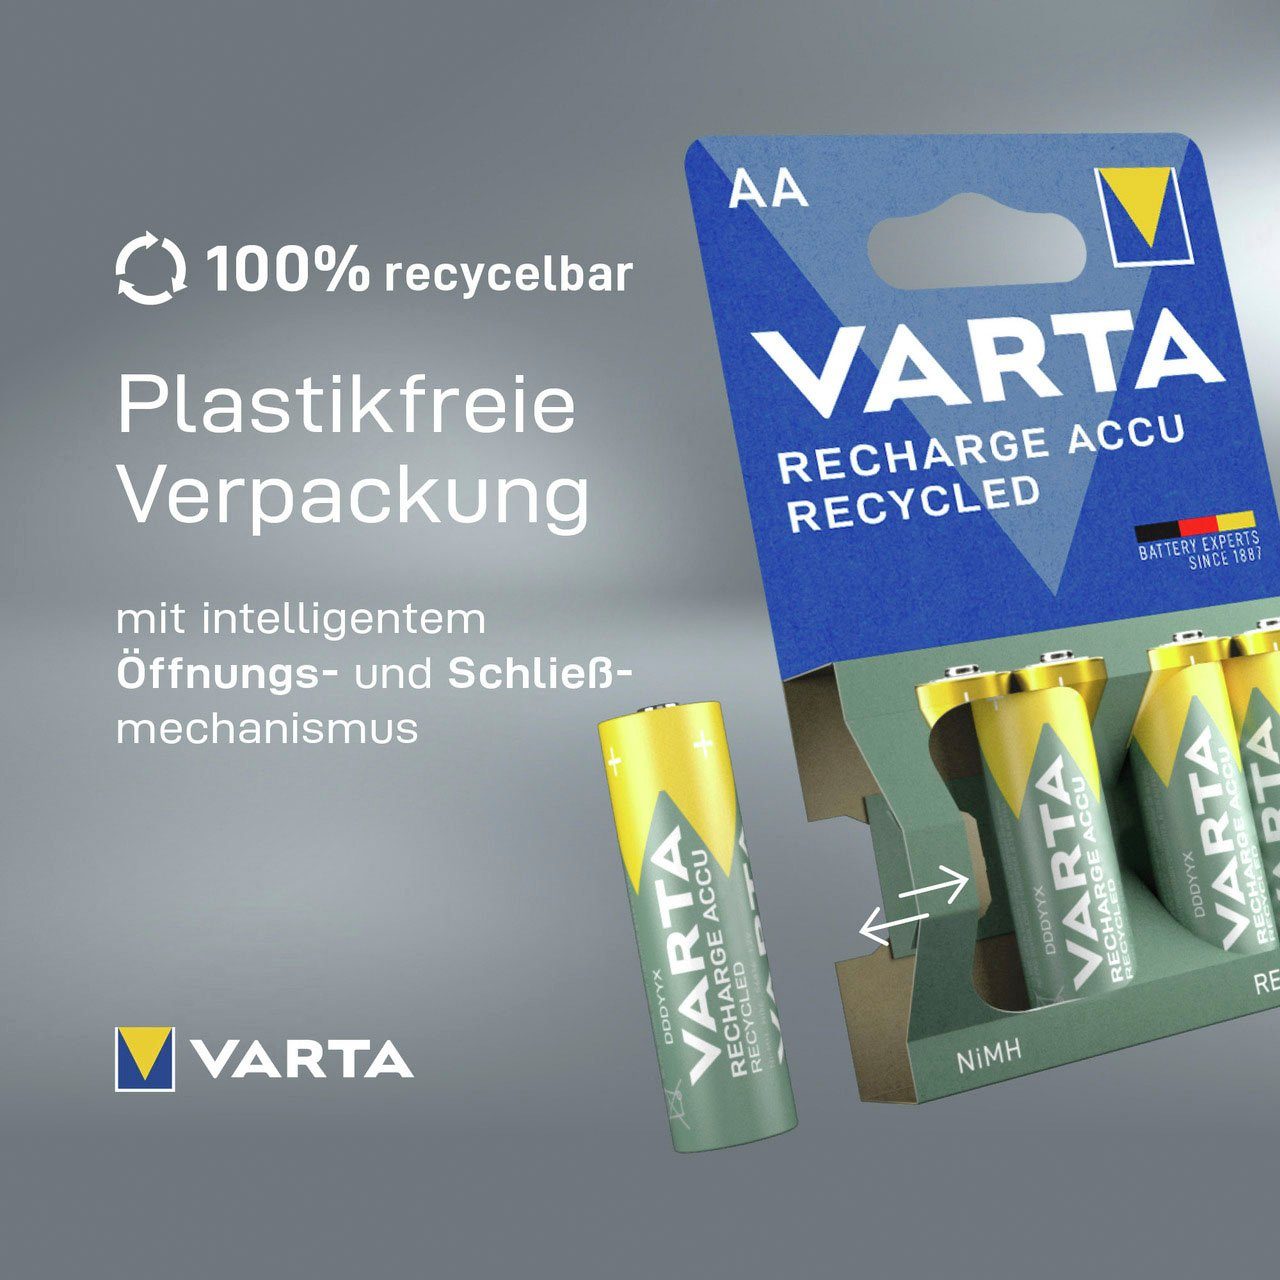 St), 4 V, Akkus 800 (1,2 VARTA Accu Micro Akku wiederauflaudbare Recharge VARTA Recycled wiederaufladbar mAh